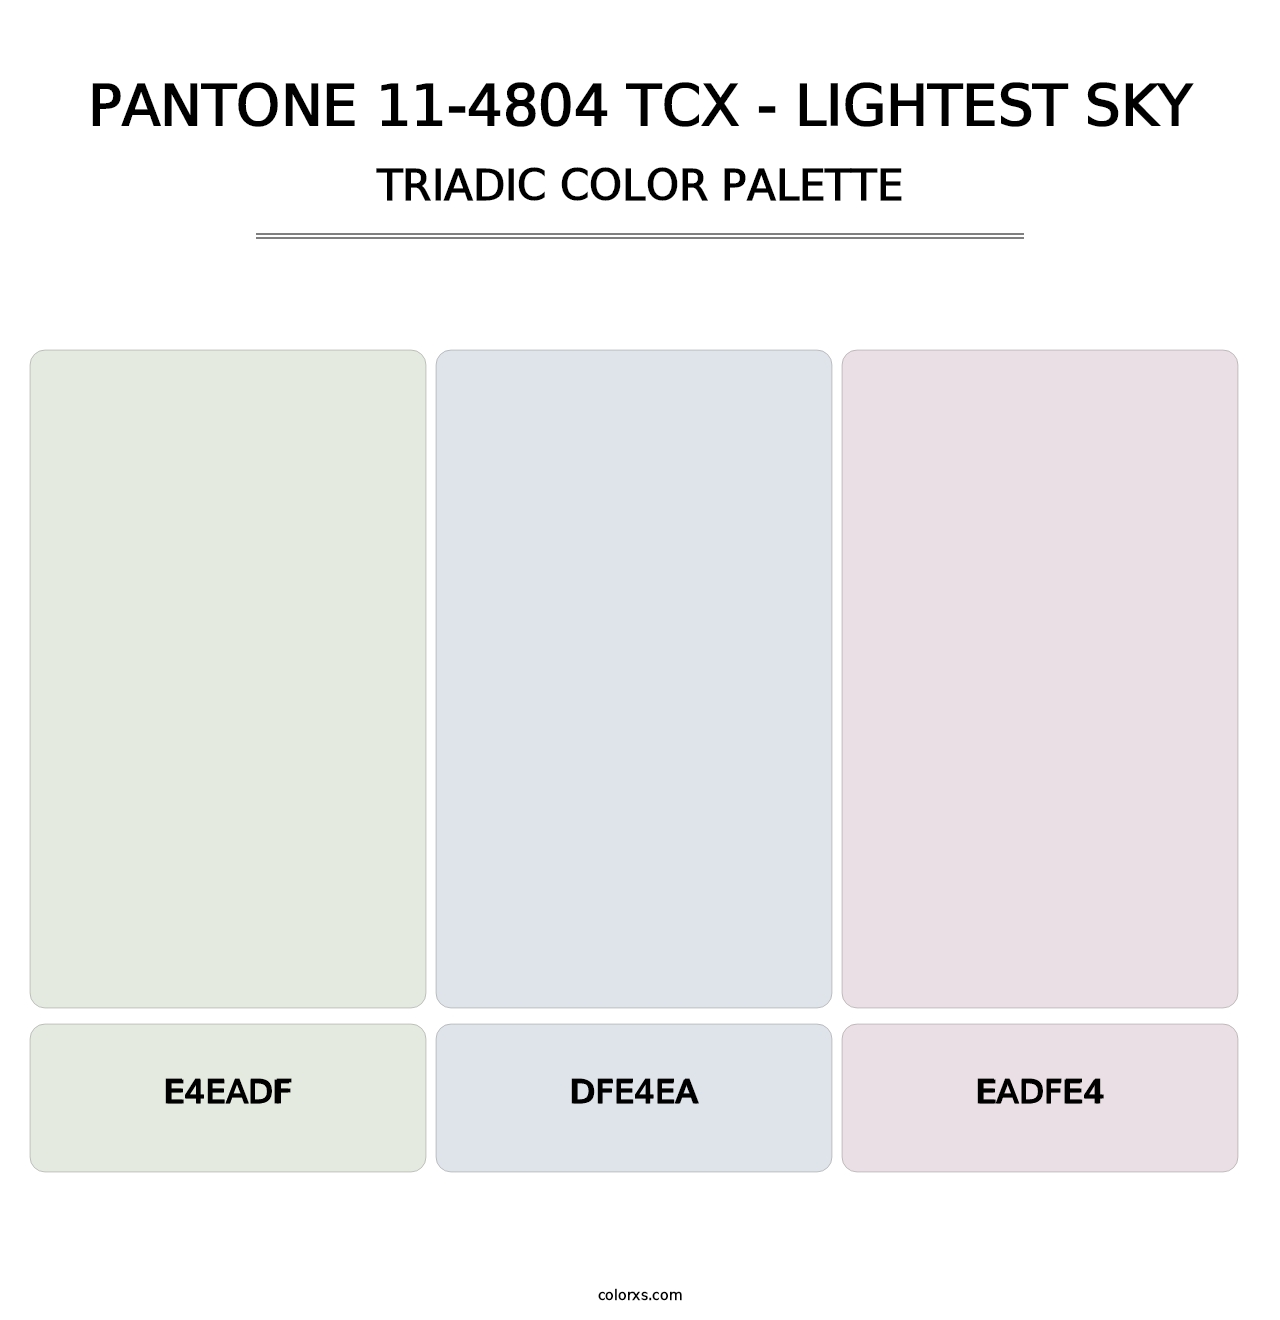 PANTONE 11-4804 TCX - Lightest Sky - Triadic Color Palette